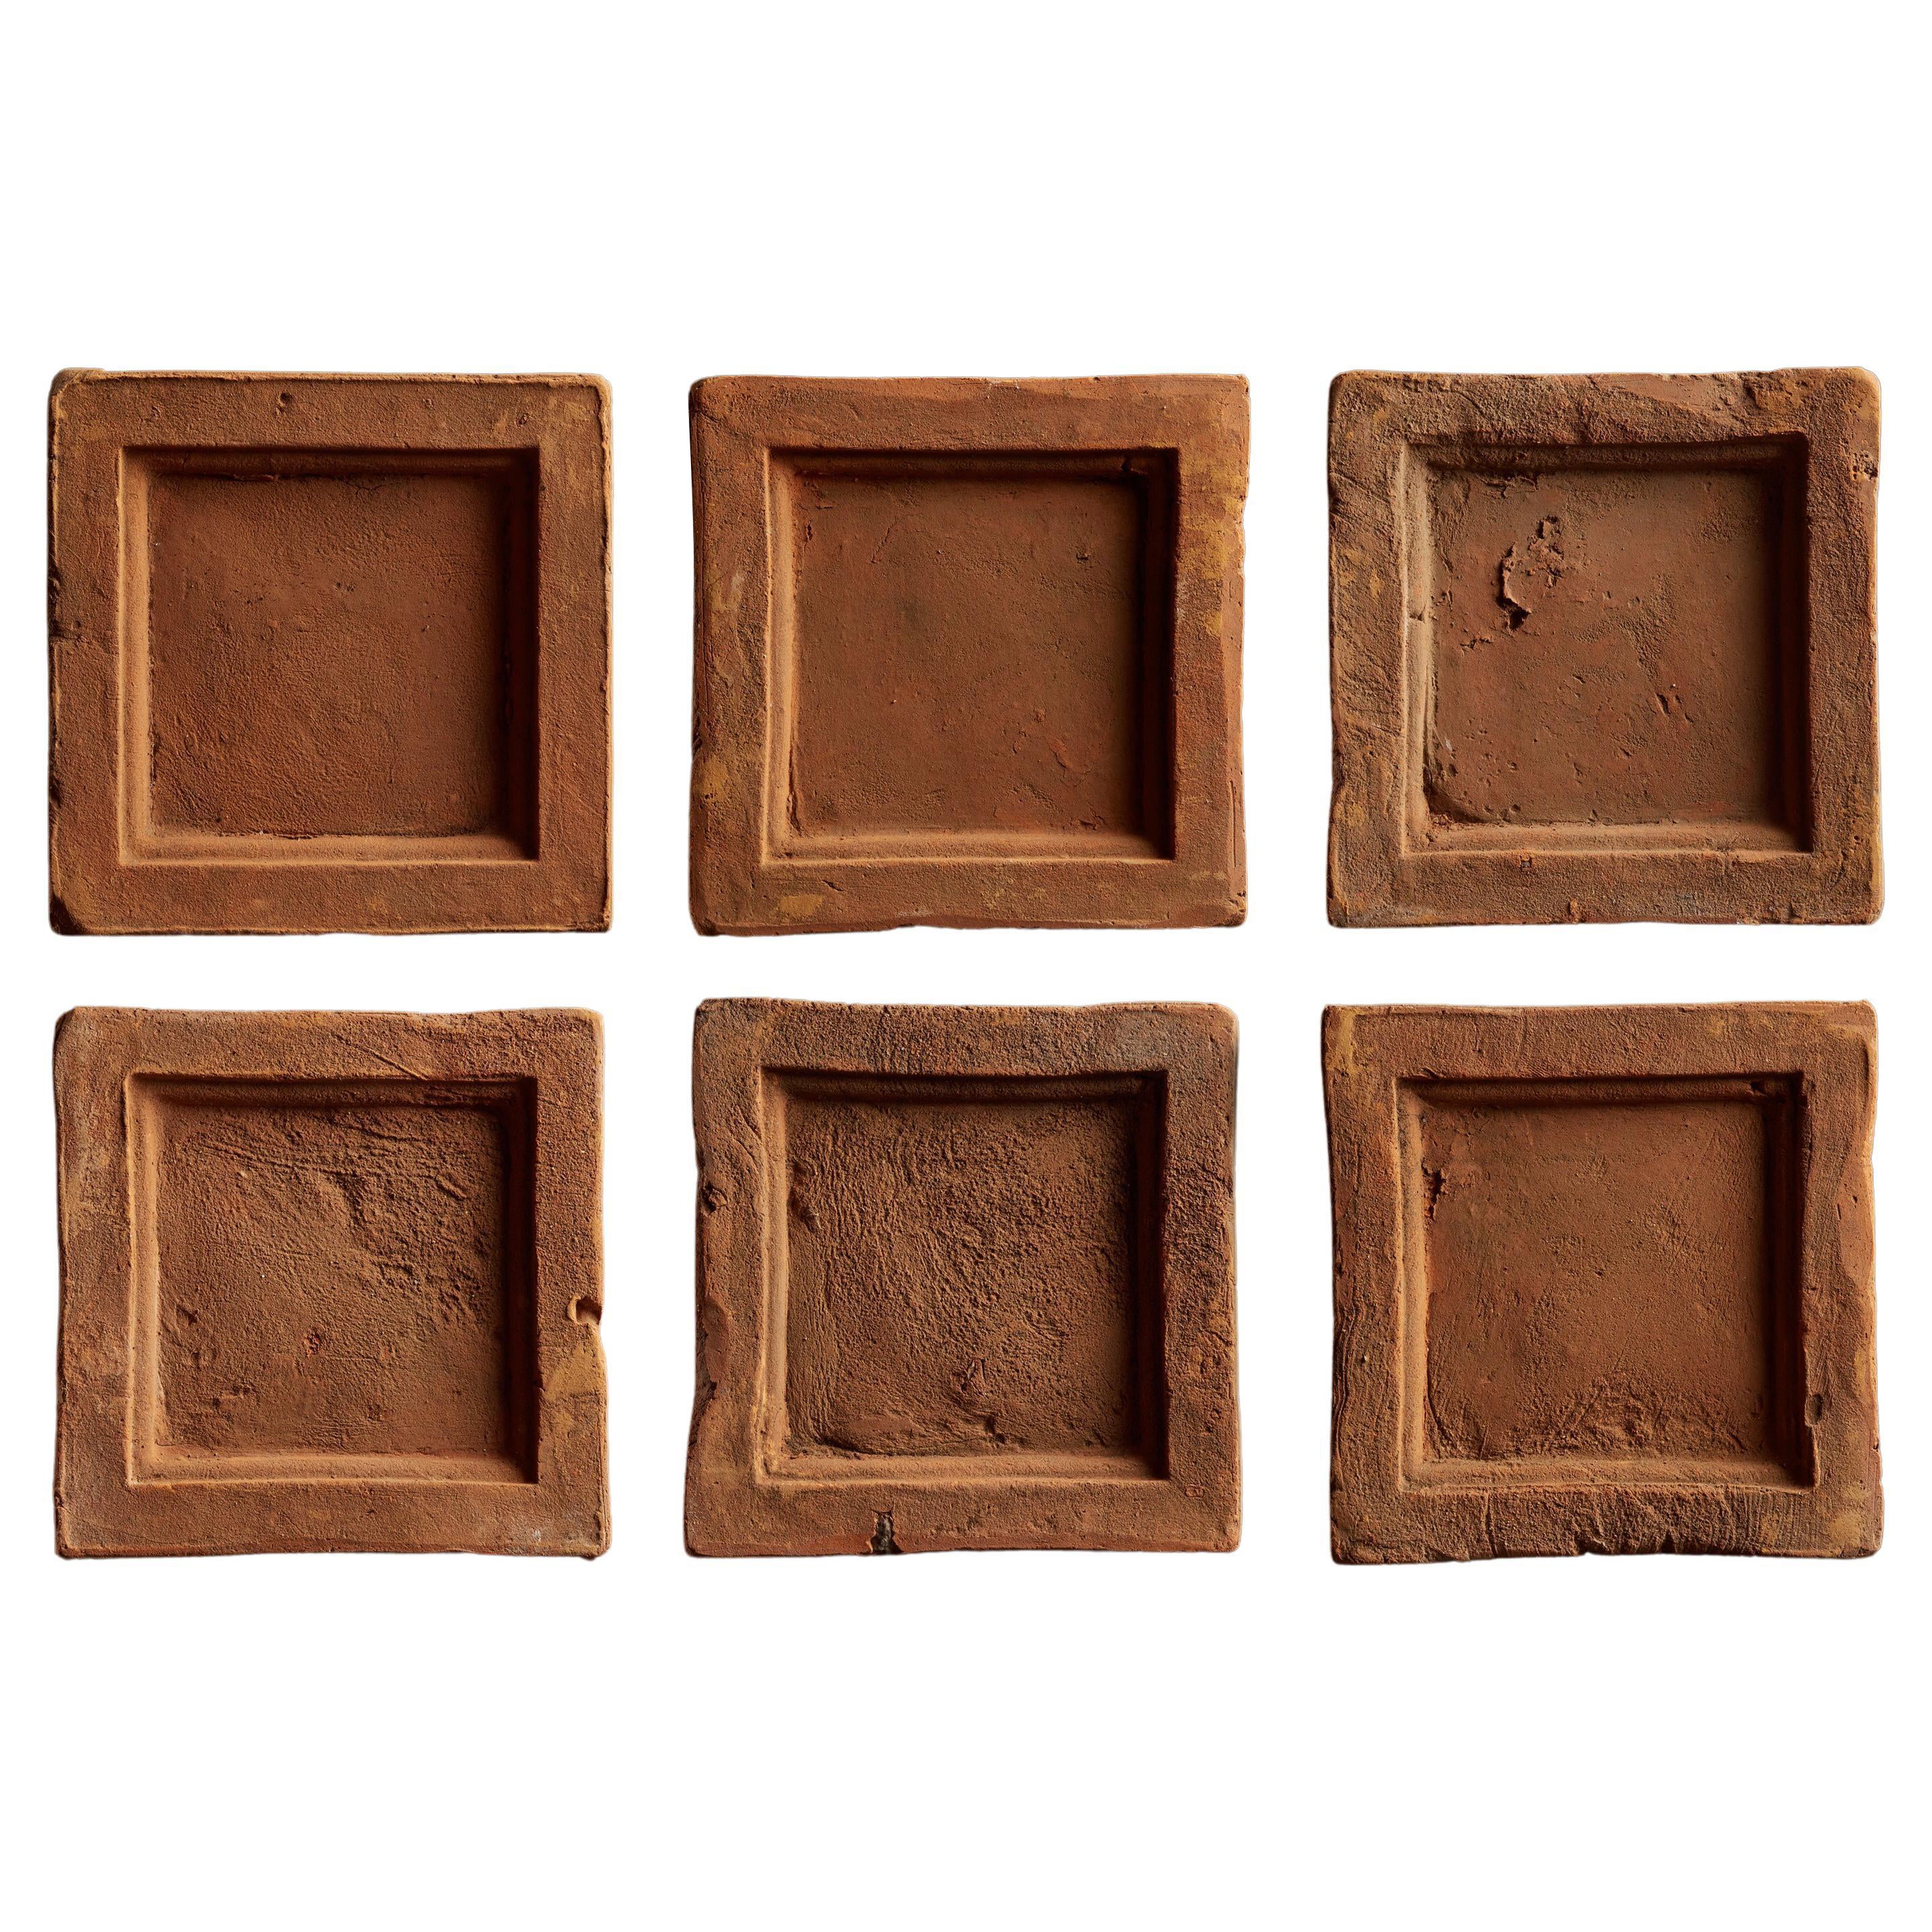 Set of 6 Antique Earthenware Tiles